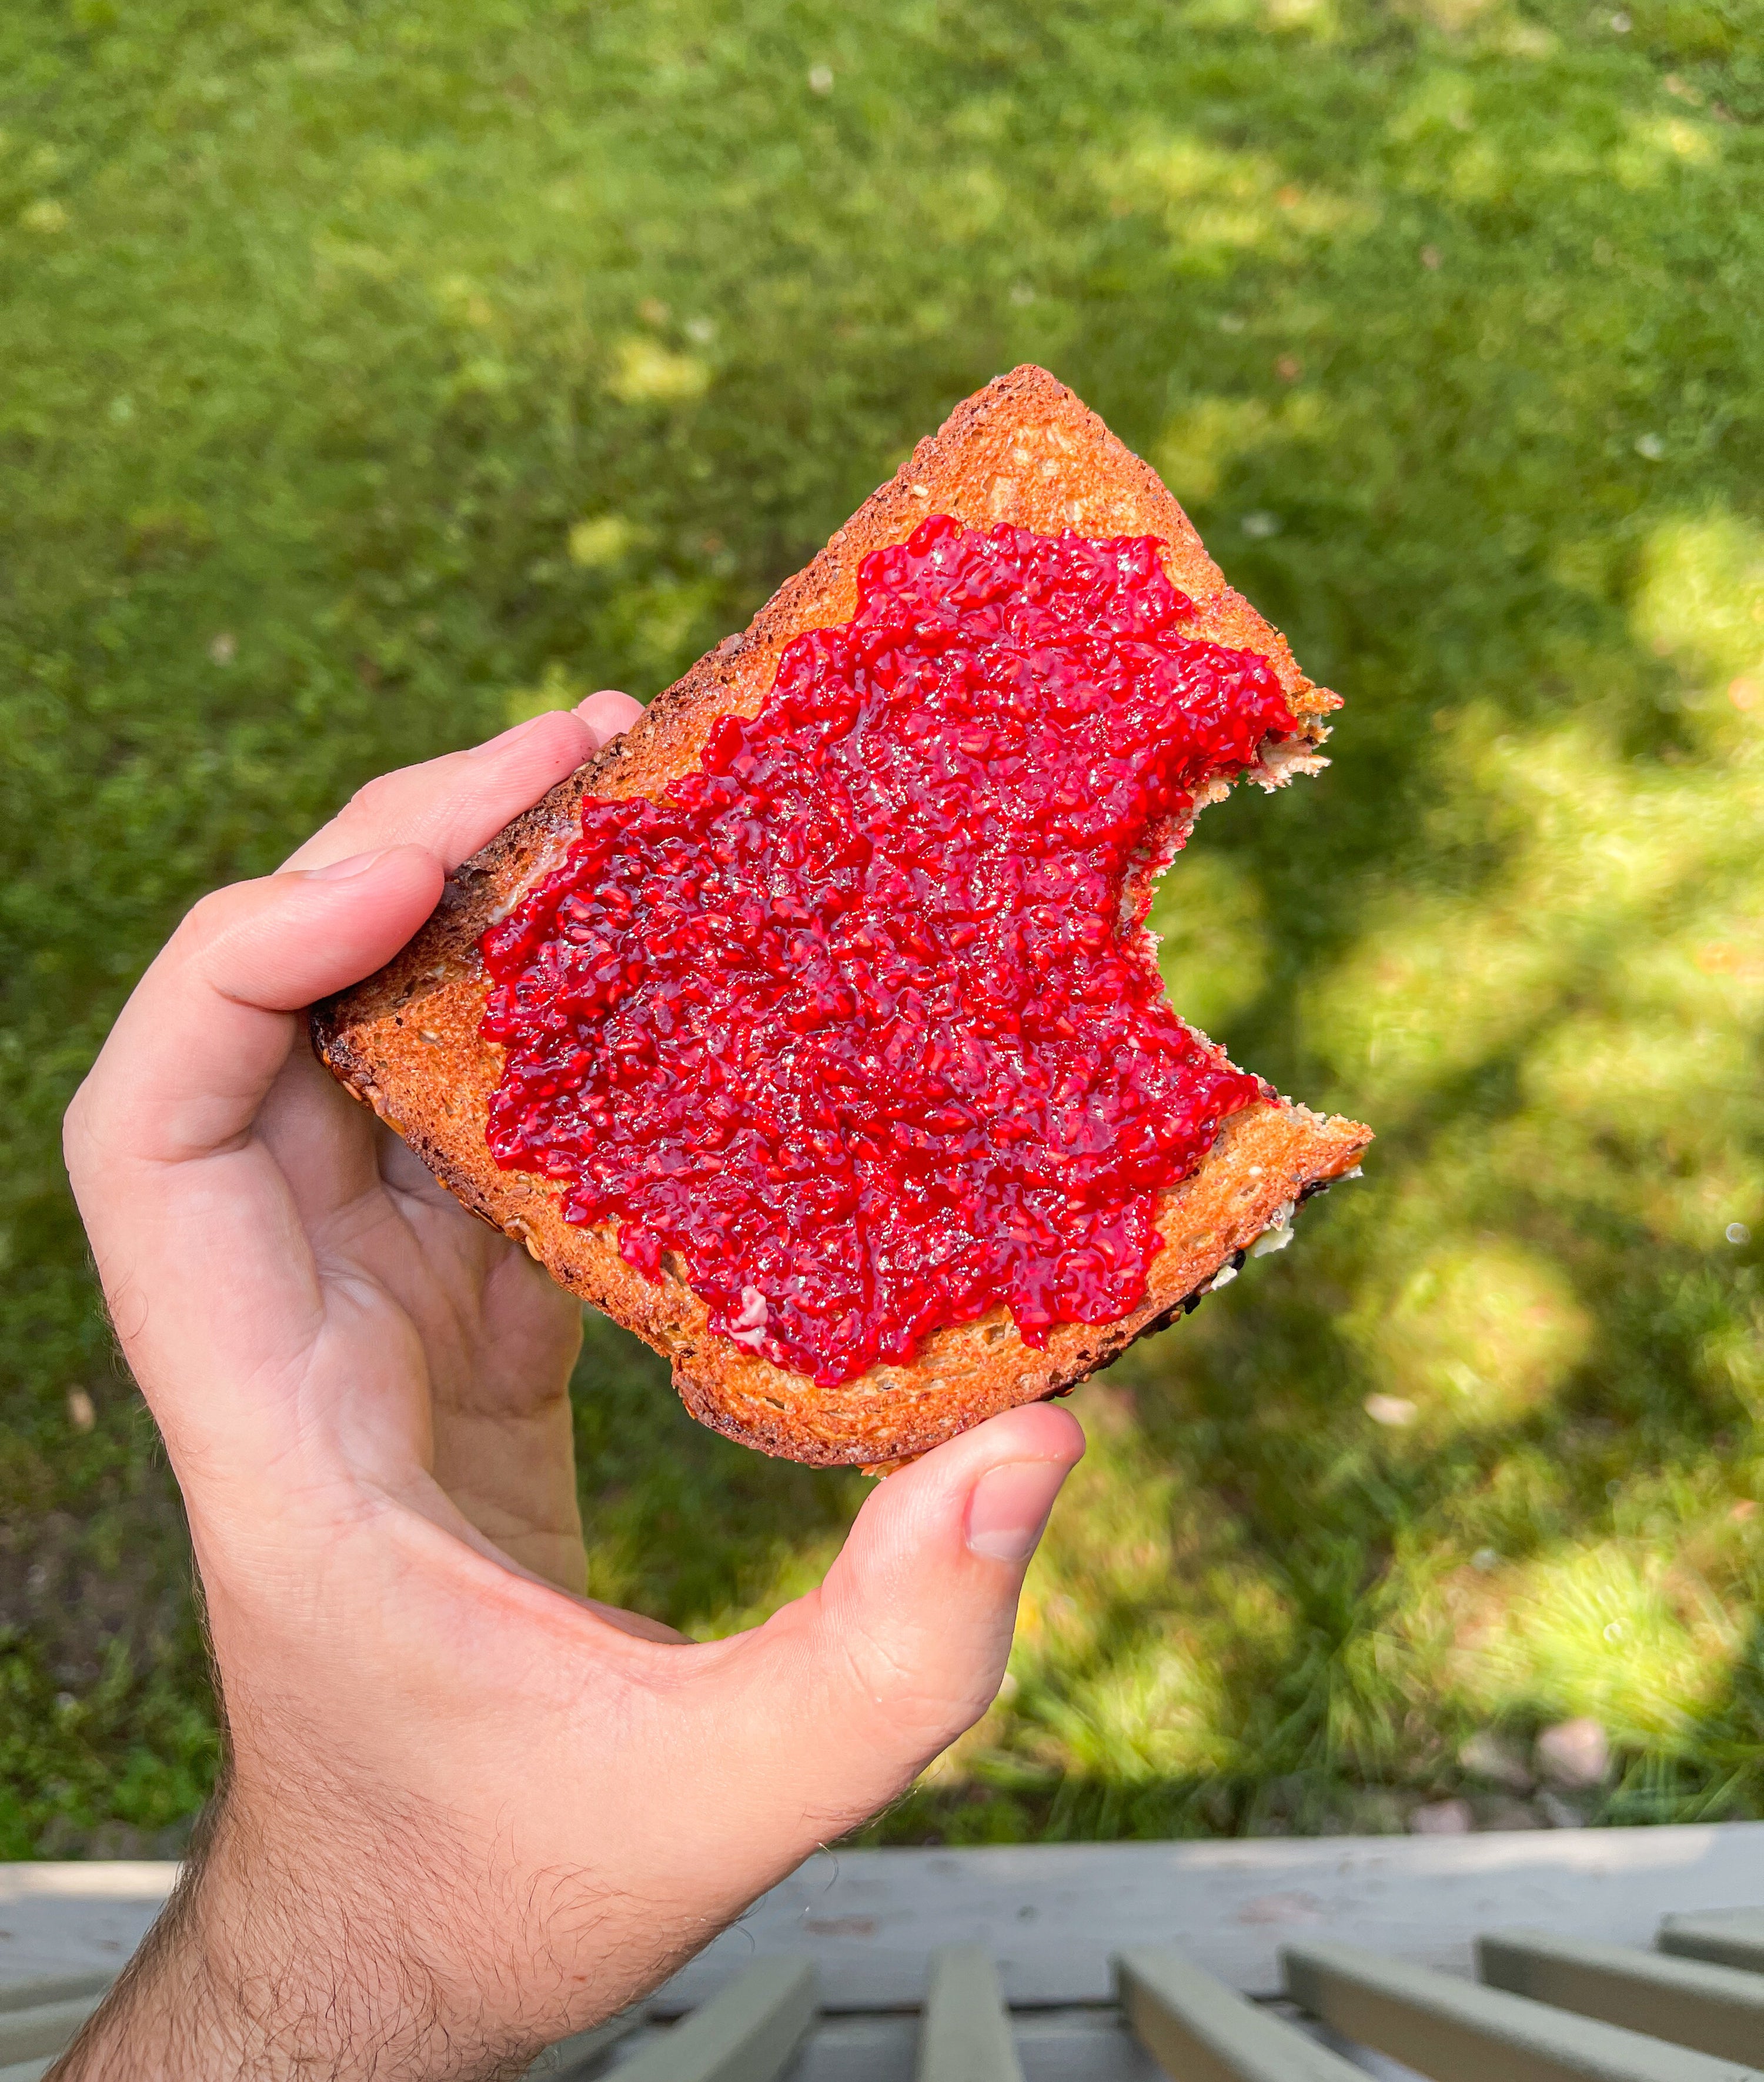 Raspberry jam spread on a bitten piece of toast